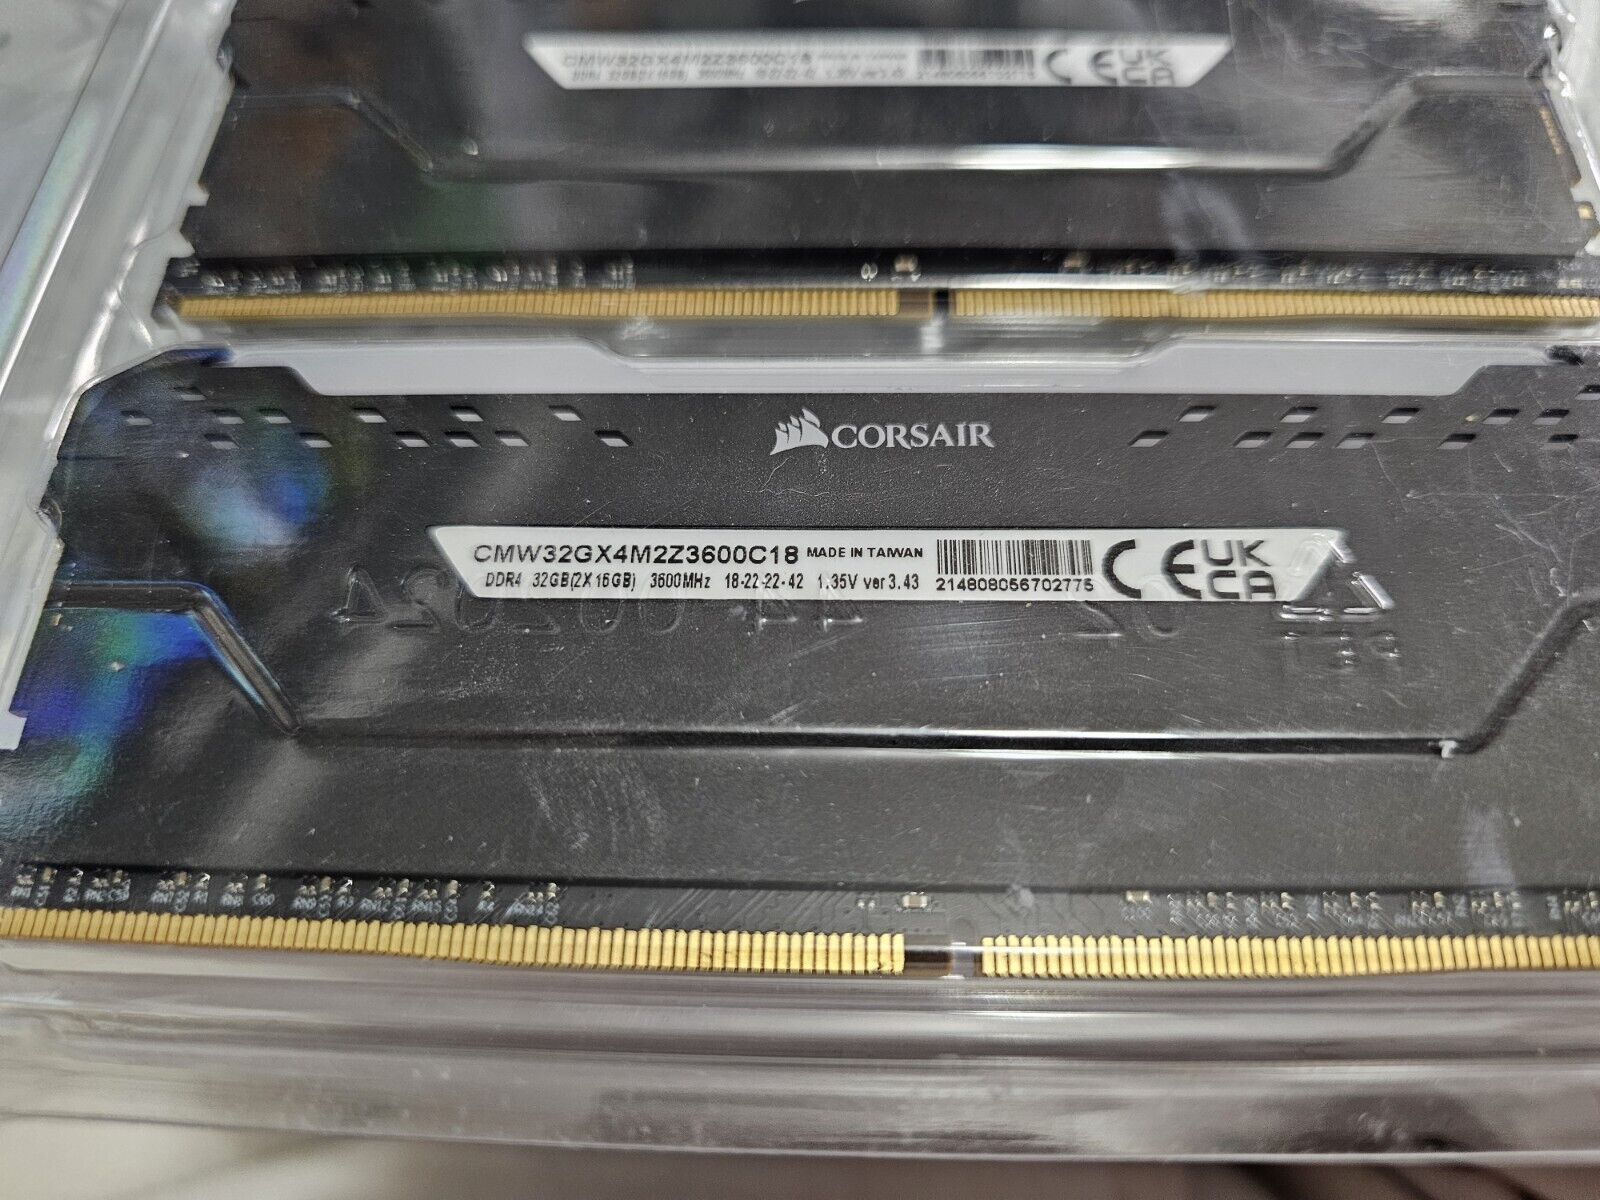 Corsair Vengeance RGB Pro 16GB Desktop Memory - CMW16GX4M2D3600C18